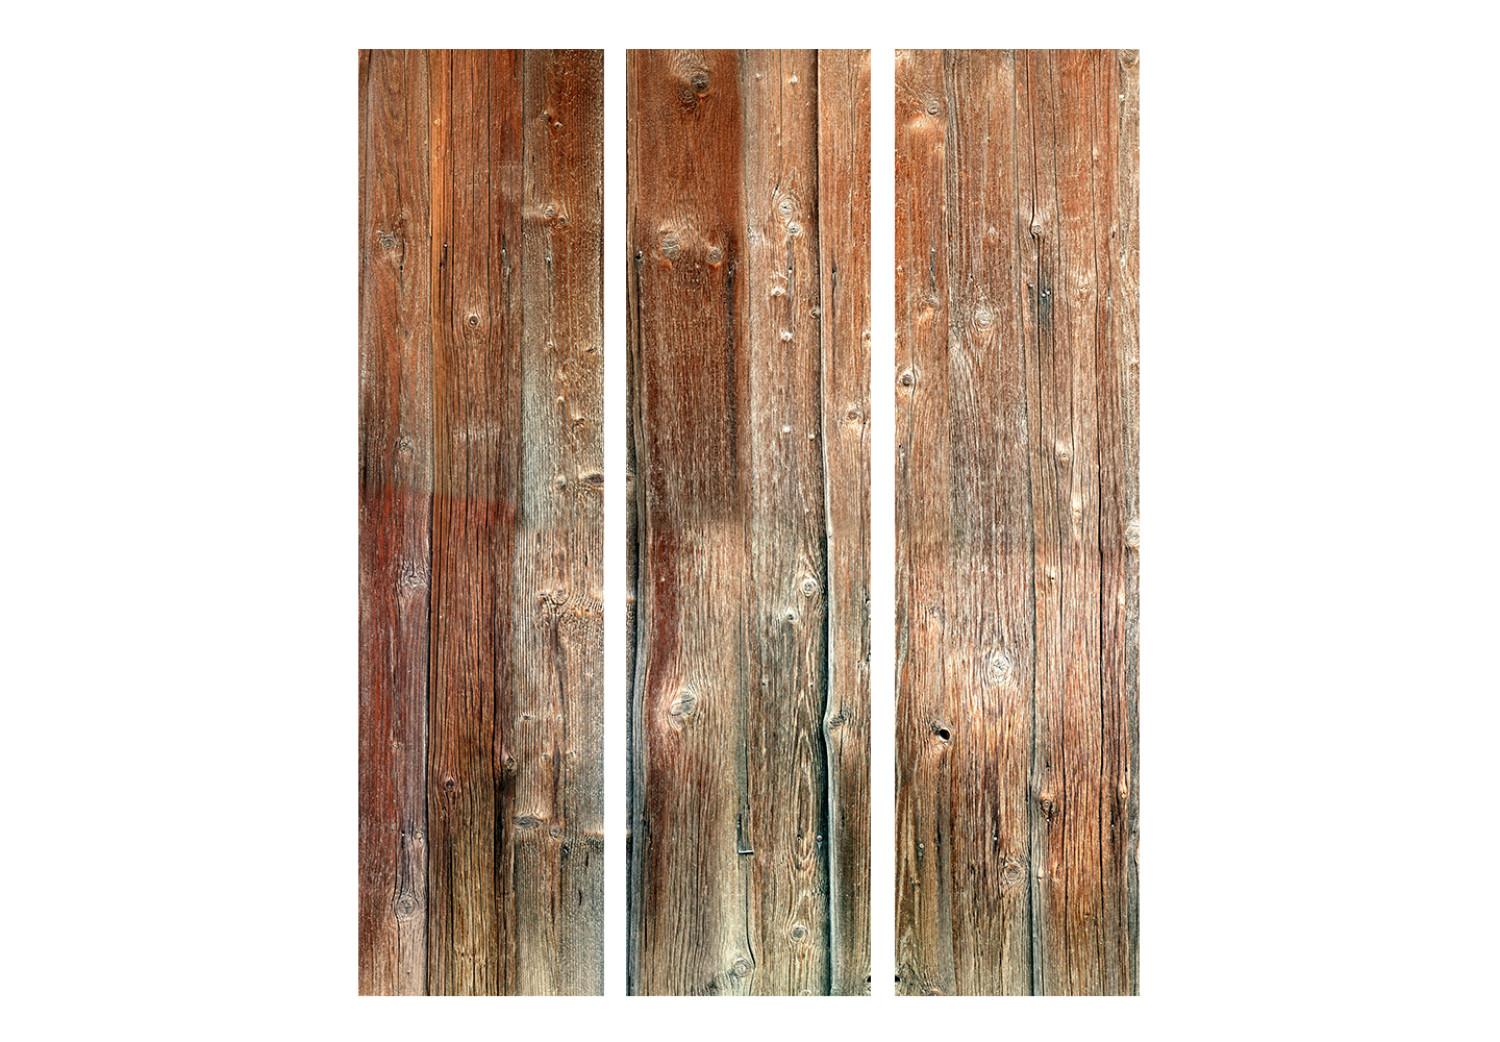 Biombo barato Casita bosque (3 partes): patrón marrón madera